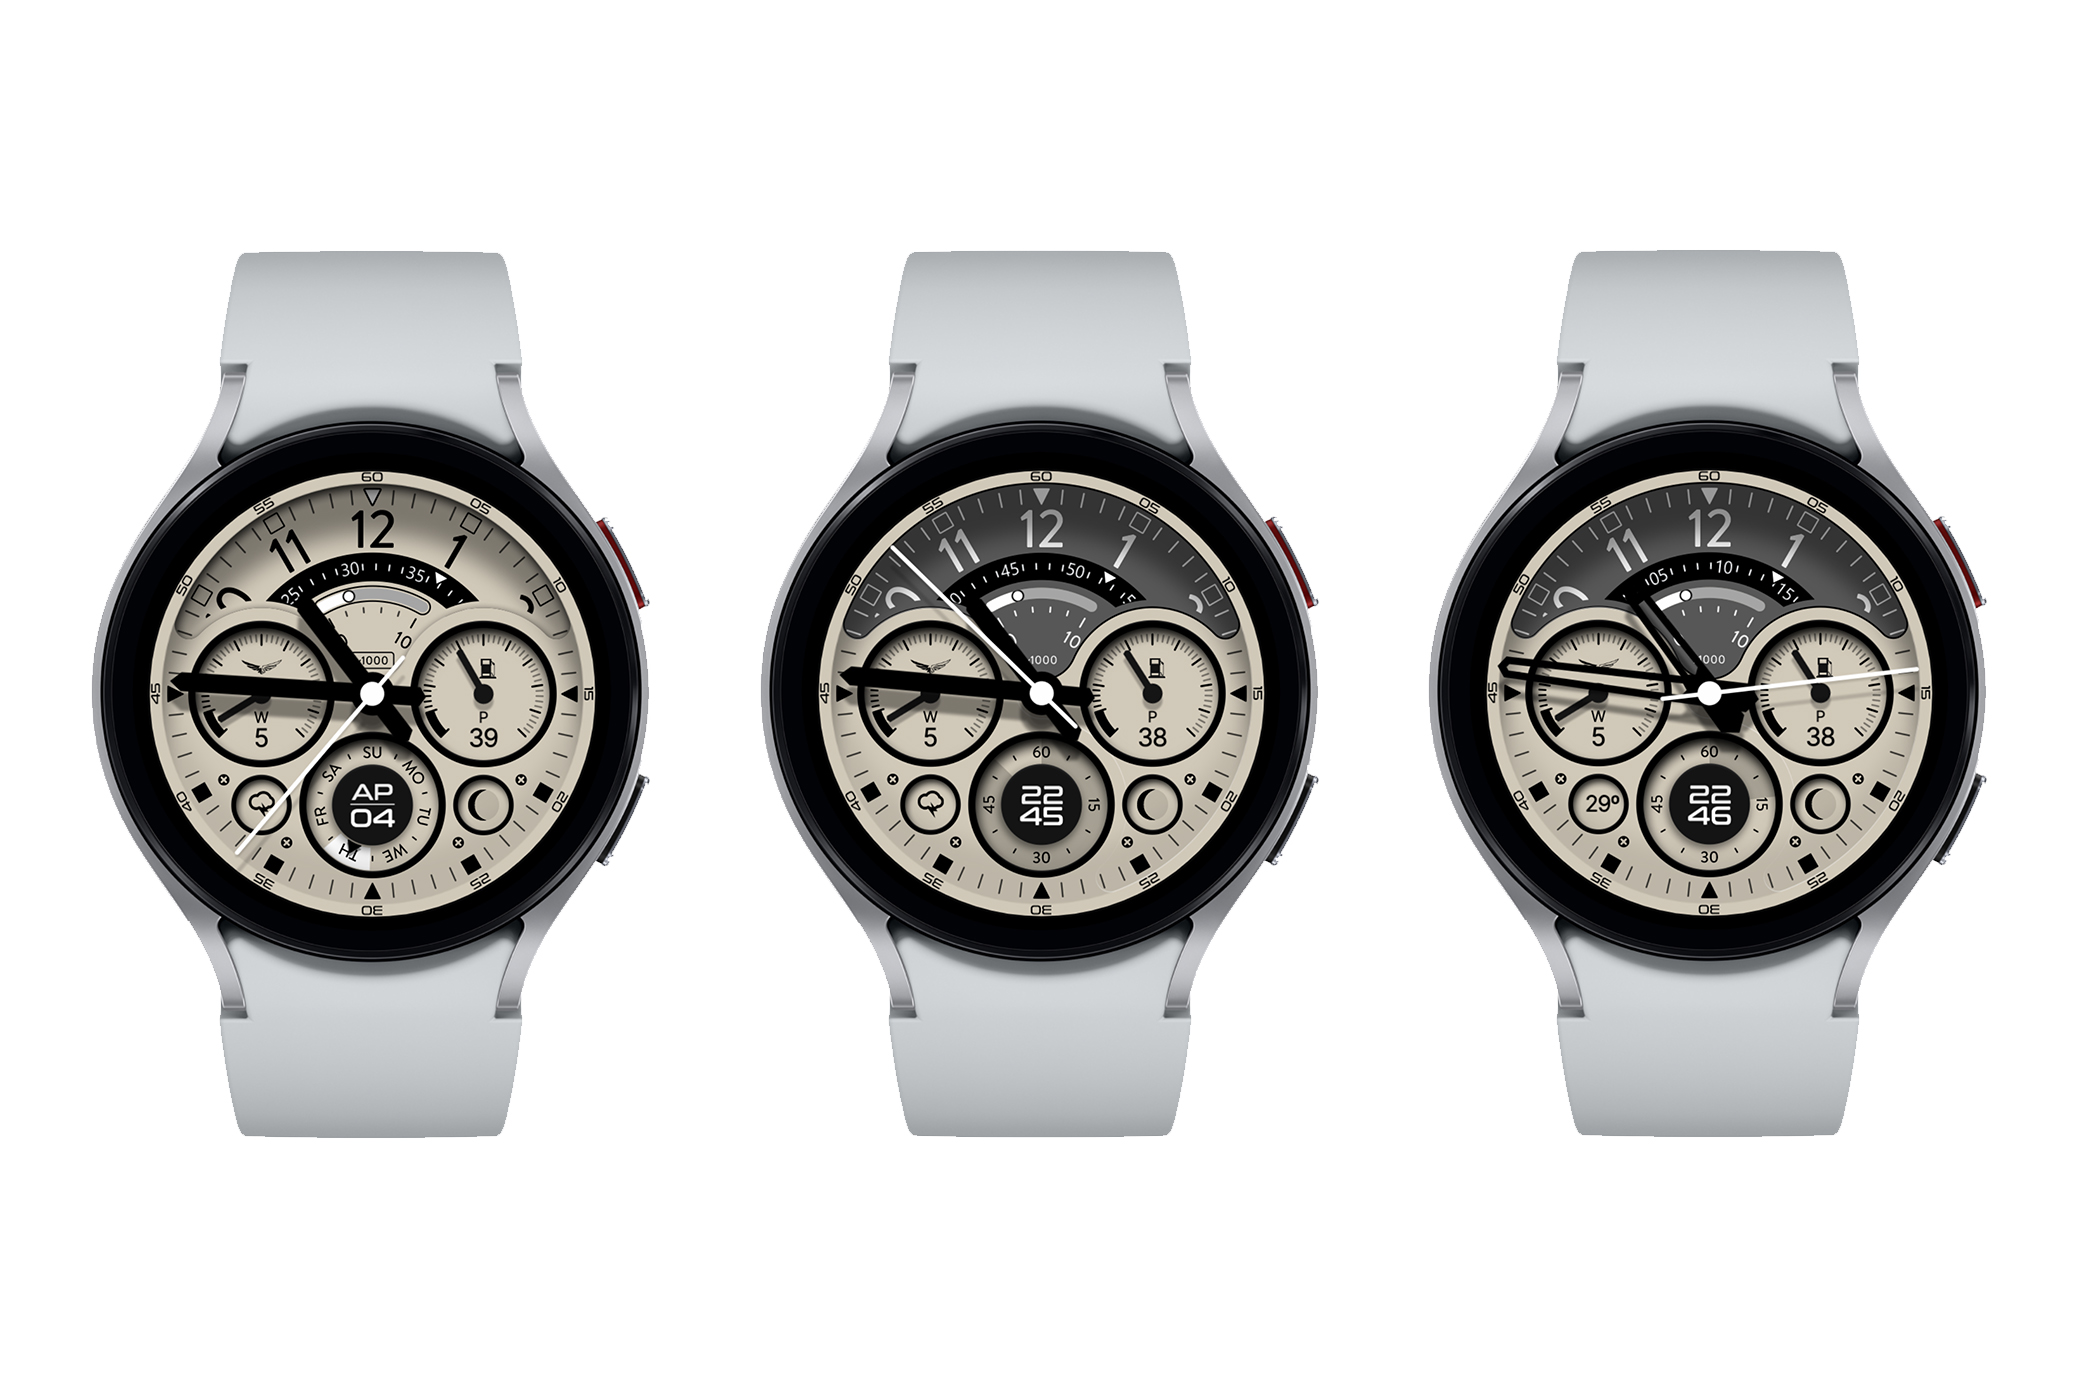 Evoque Facer Wear OS watch face for Samsung Galaxy Watch.